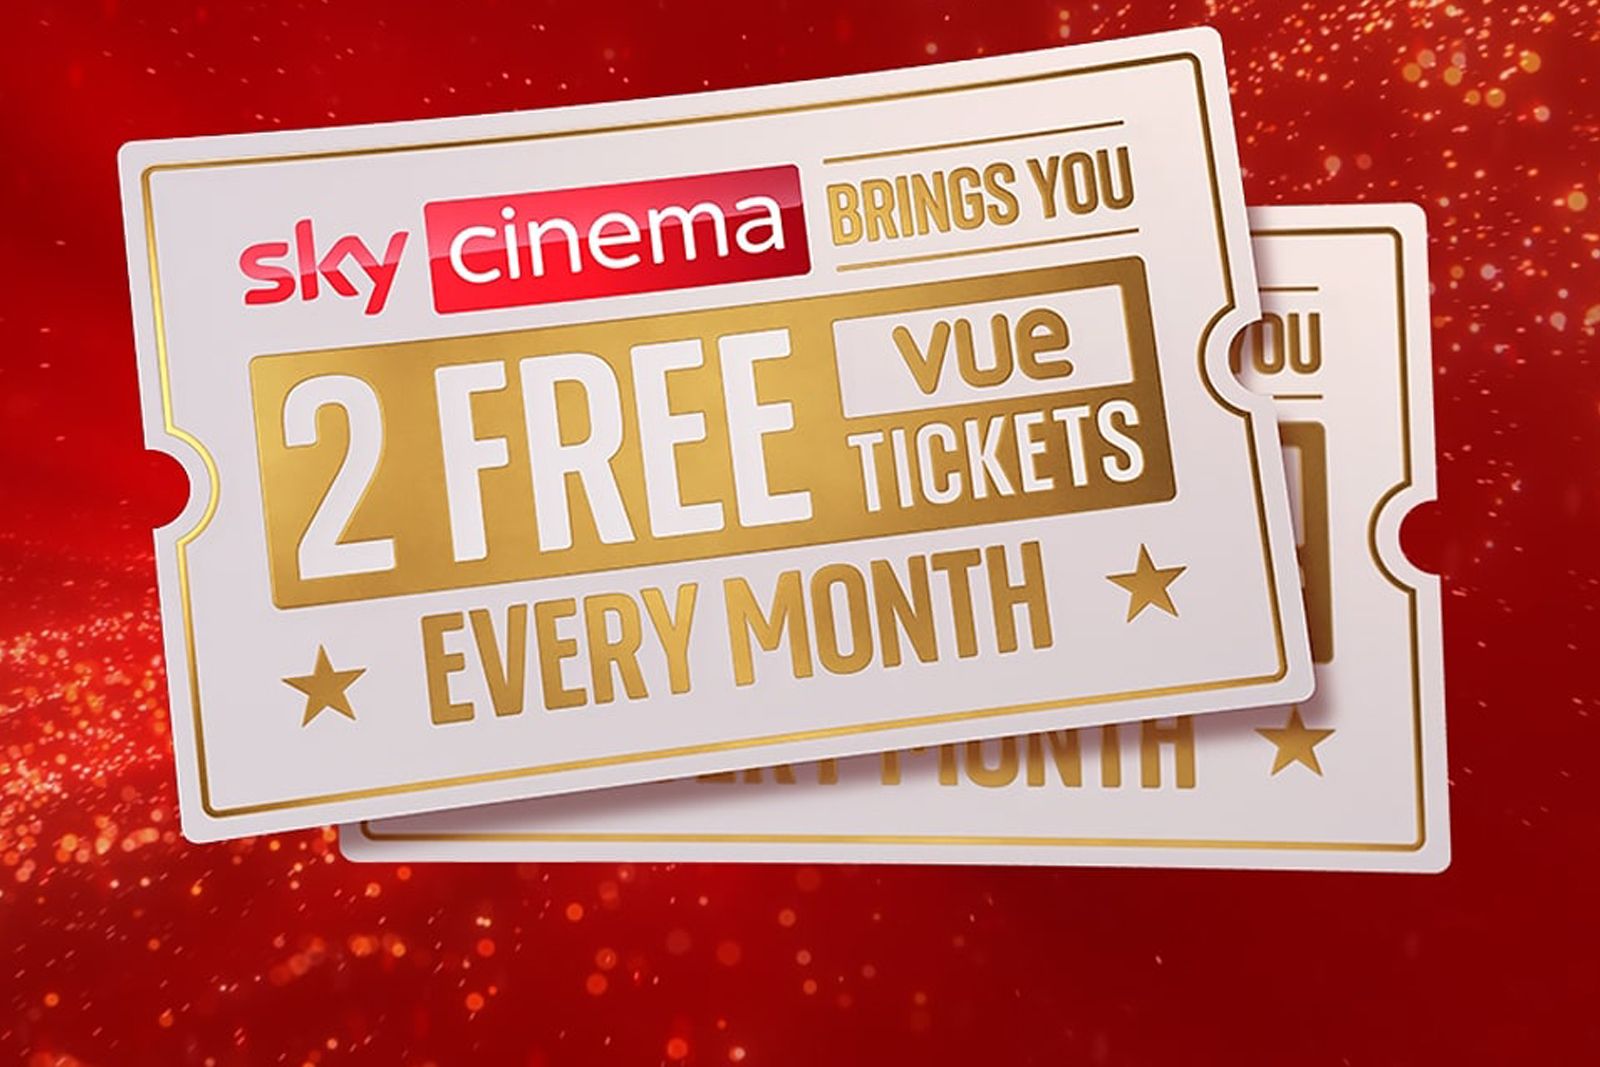 Sky Cinema tickets